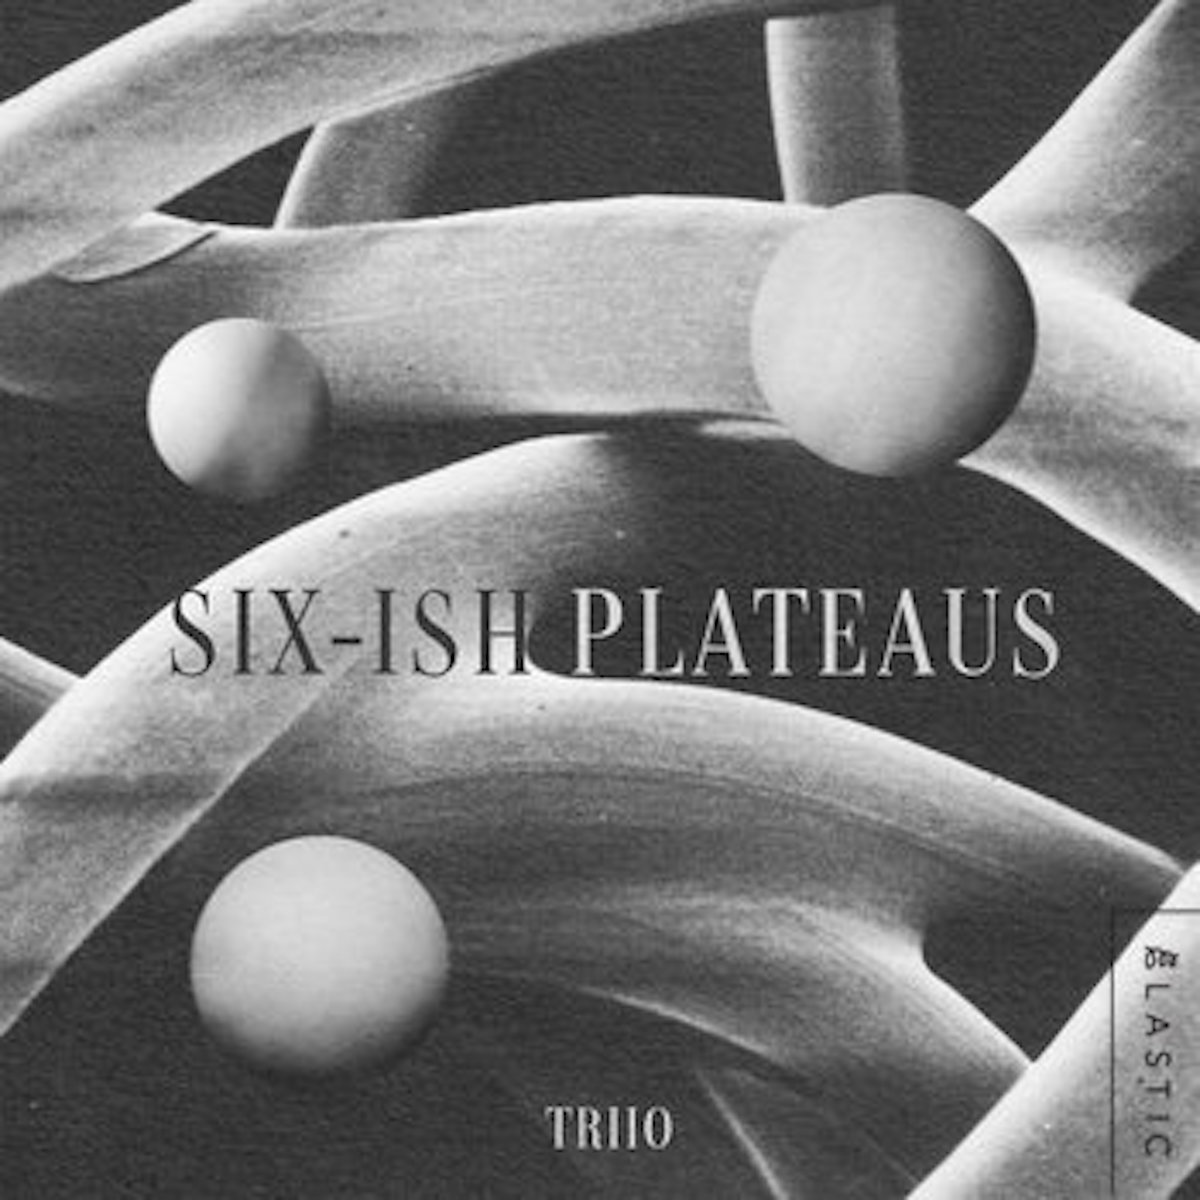 Alex Fournier Trio
Six-Ish Plateaus